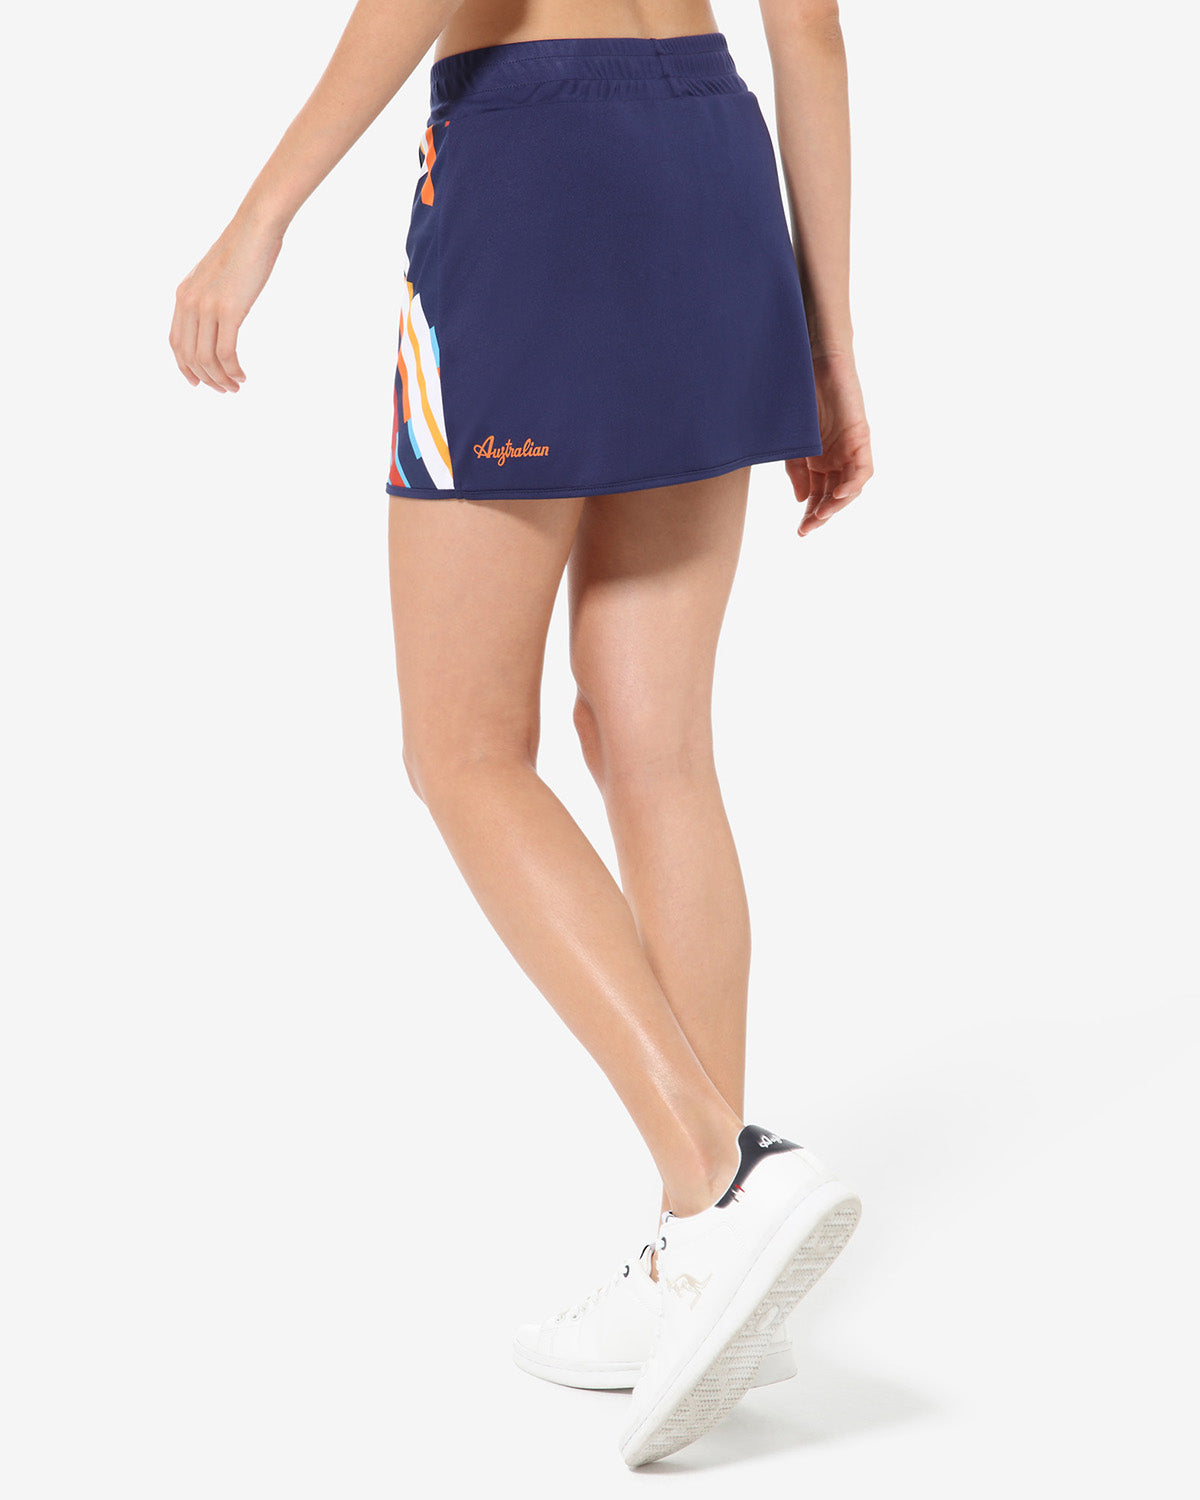 S-Lights Skirt: Australian Tennis